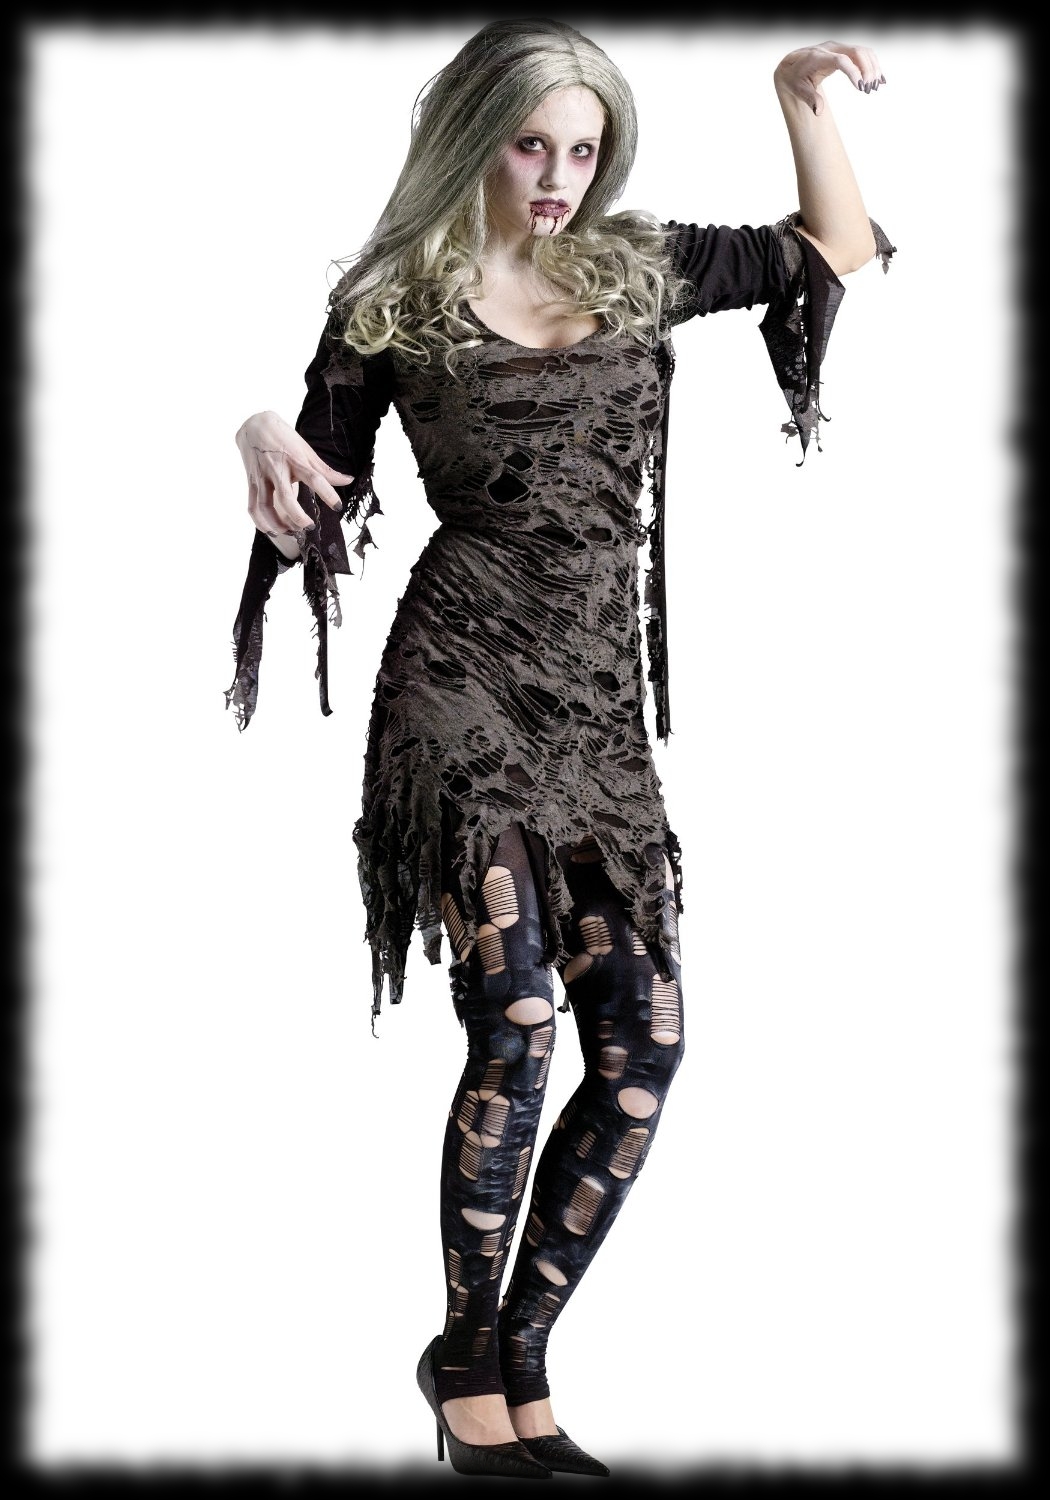 Girl Zombie Halloween Costume For Sale